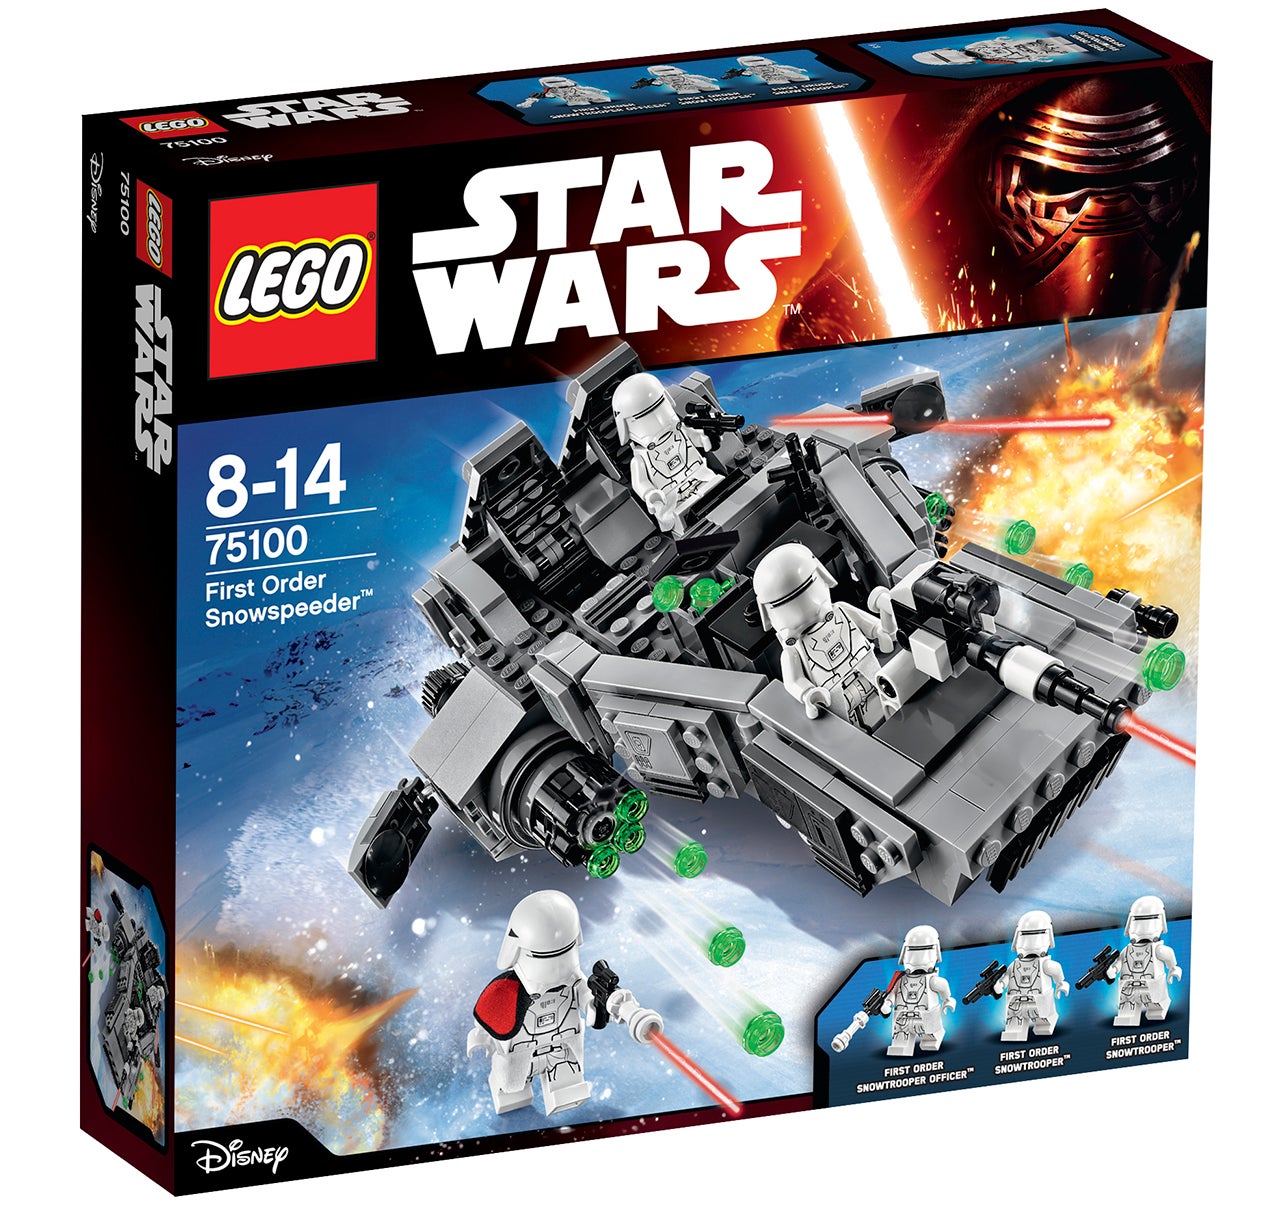 Lego Has Officially Revealed its Star Wars Force Awakens Toys Gizmodo UK